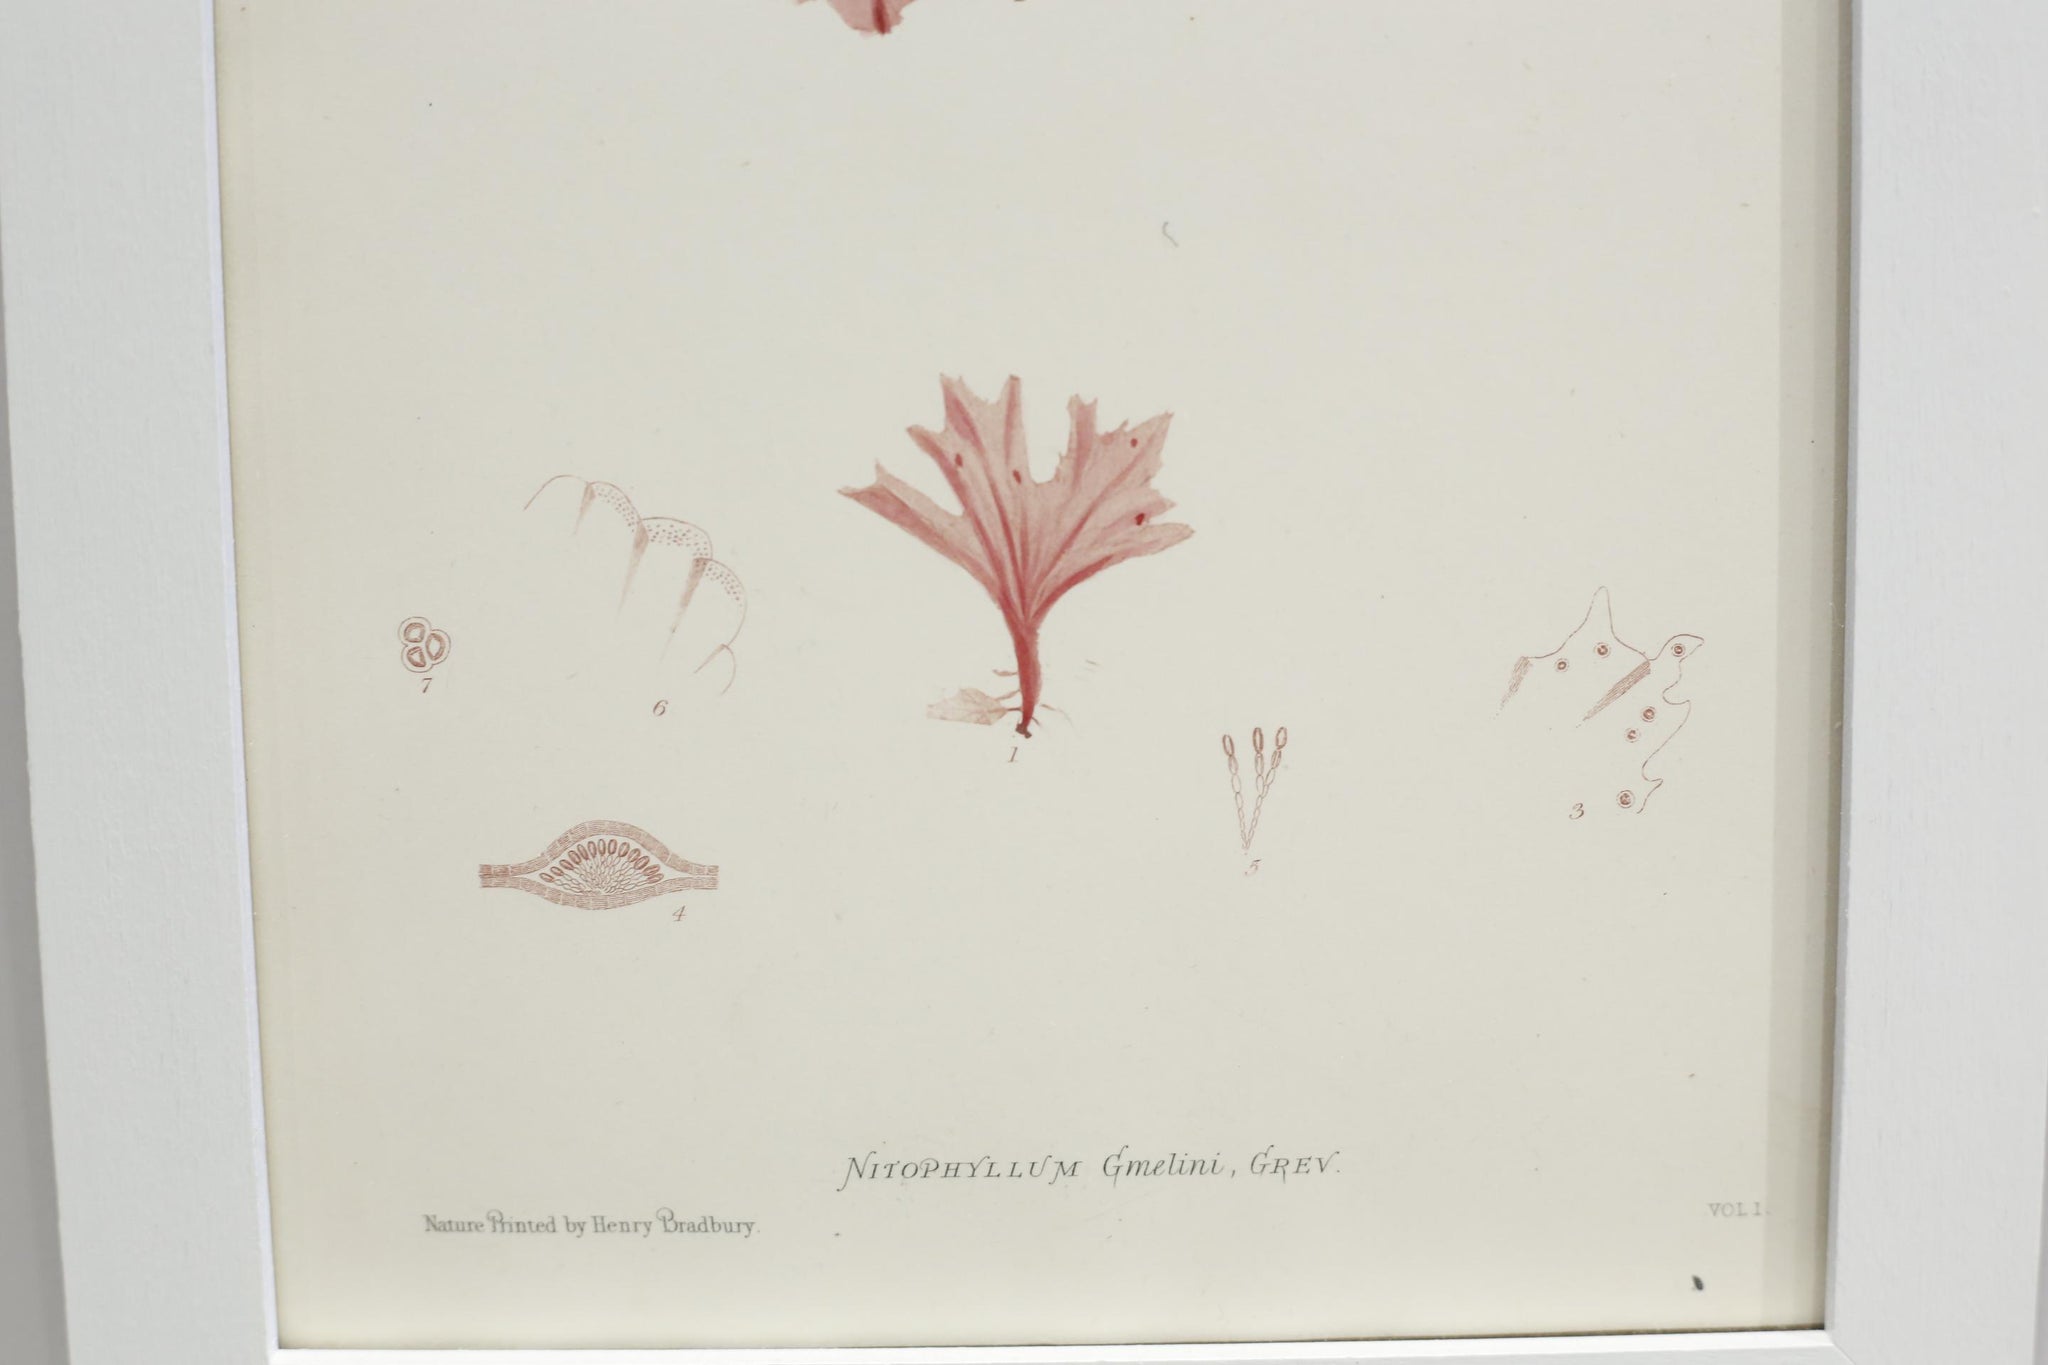 Henry Bradbury Seaweed print #2